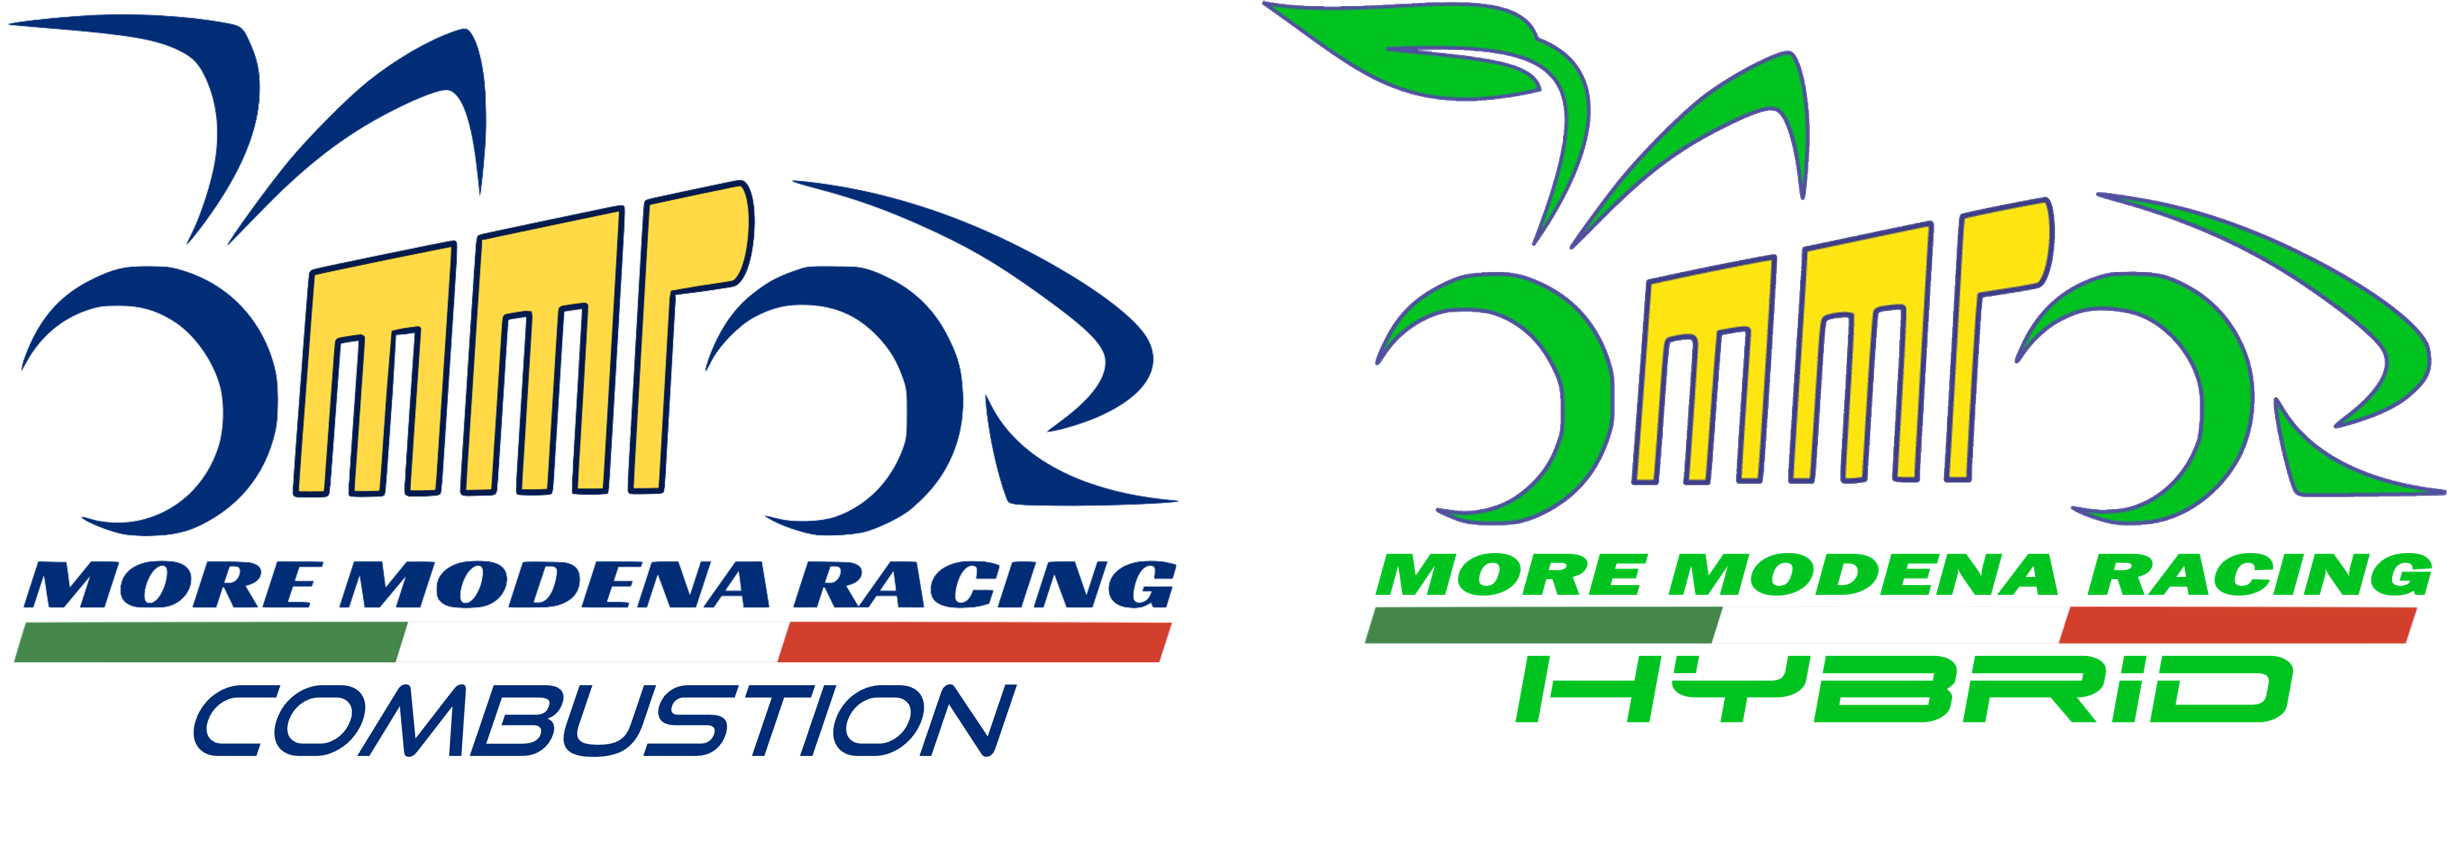 Unimore – Modena Racing